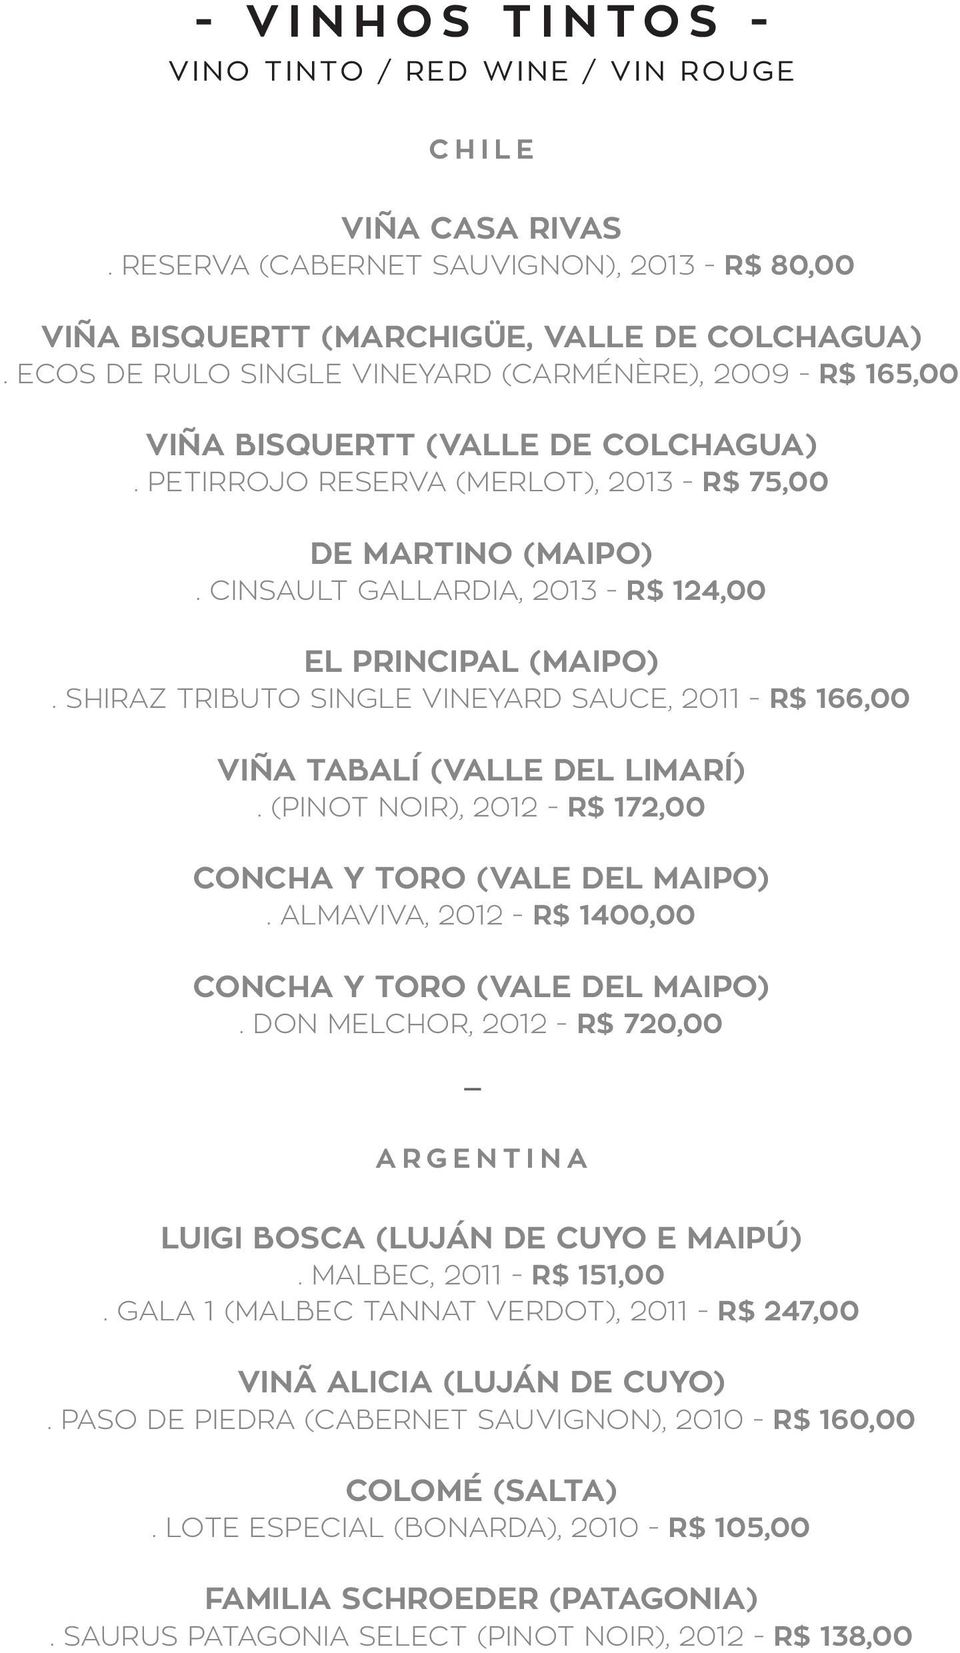 CINSAULT GALLARDIA, 2013 - R$ 124,00 EL PRINCIPAL (MAIPO). SHIRAZ TRIBUTO SINGLE VINEYARD SAUCE, 2011 - R$ 166,00 VIÑA TABALÍ (VALLE DEL LIMARÍ).